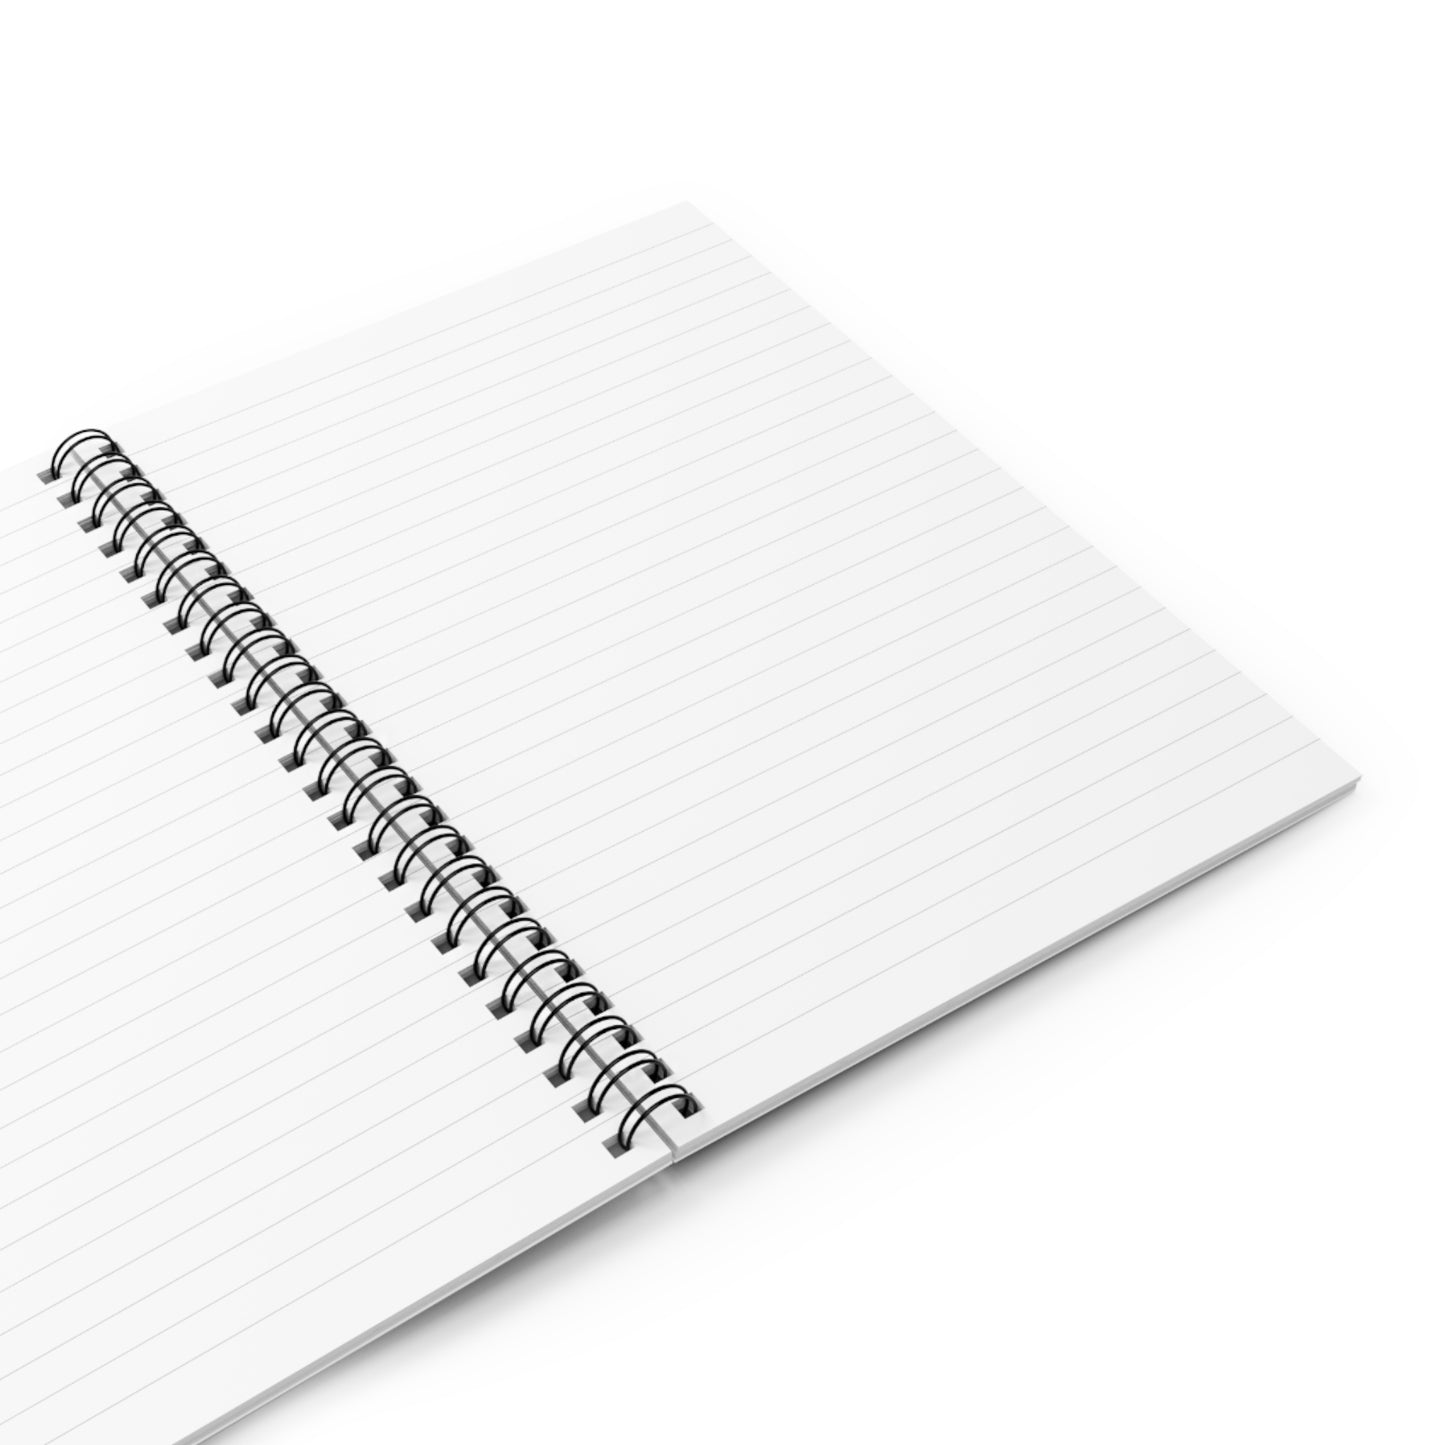 Truejoy Unlimited Logo (Joy Jewel) Notebook - Ruled Line